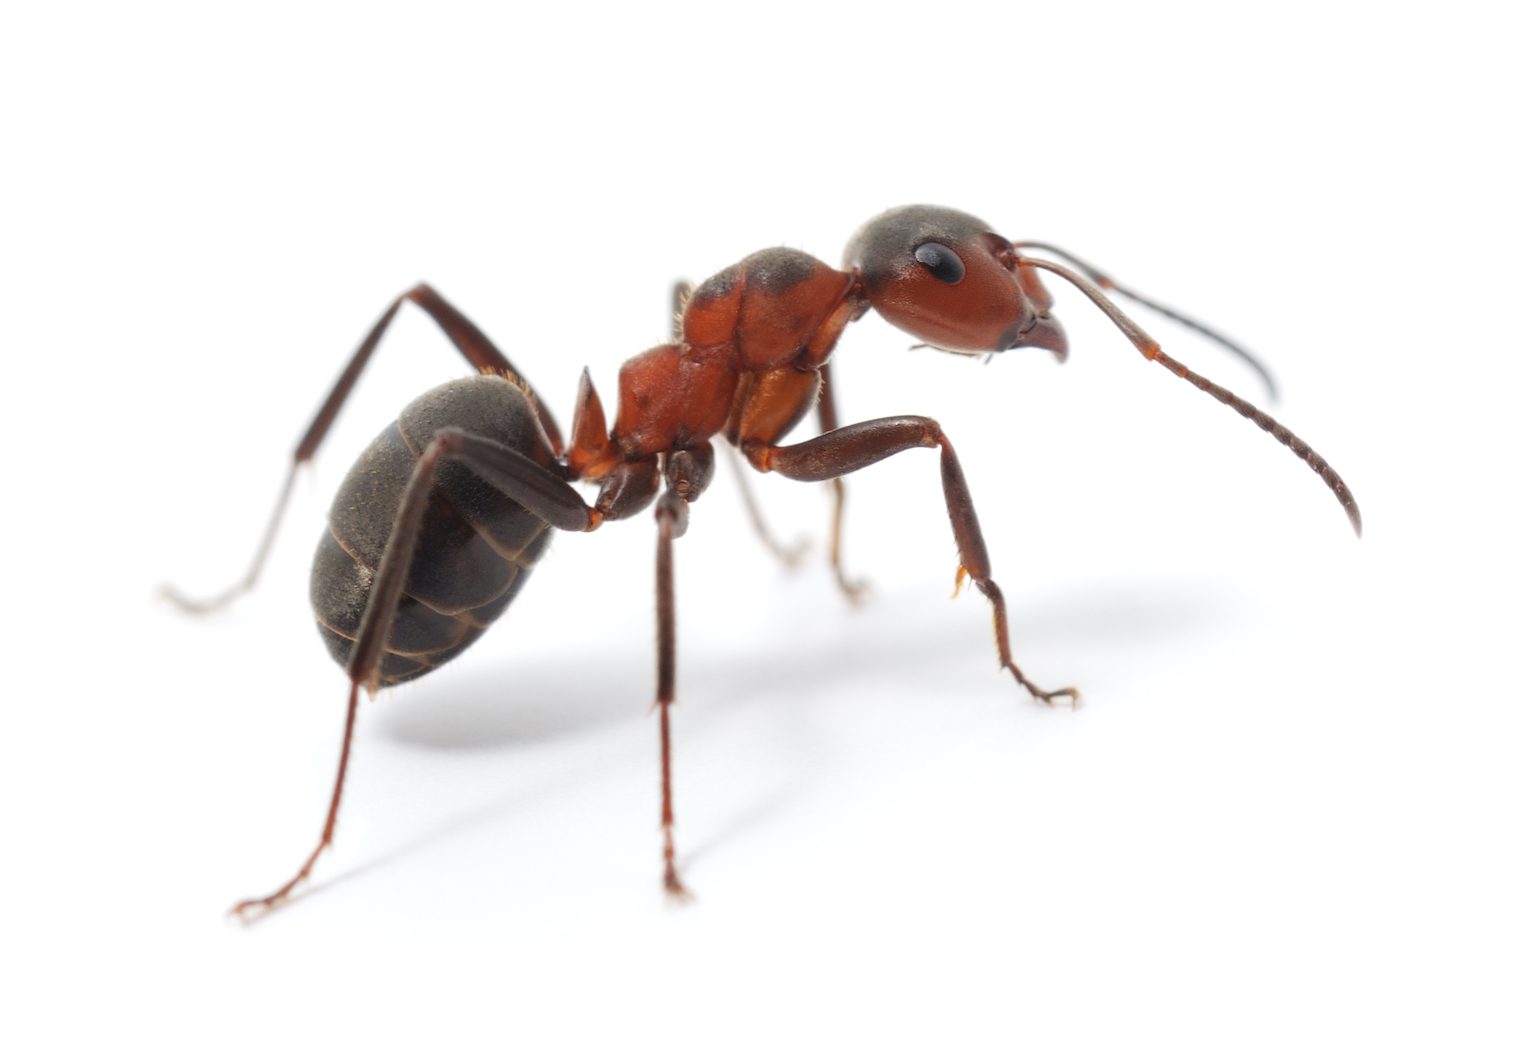 Large Ant Control - Exterminator in Nashville - Preventative Pest Control - Certified Pest Control